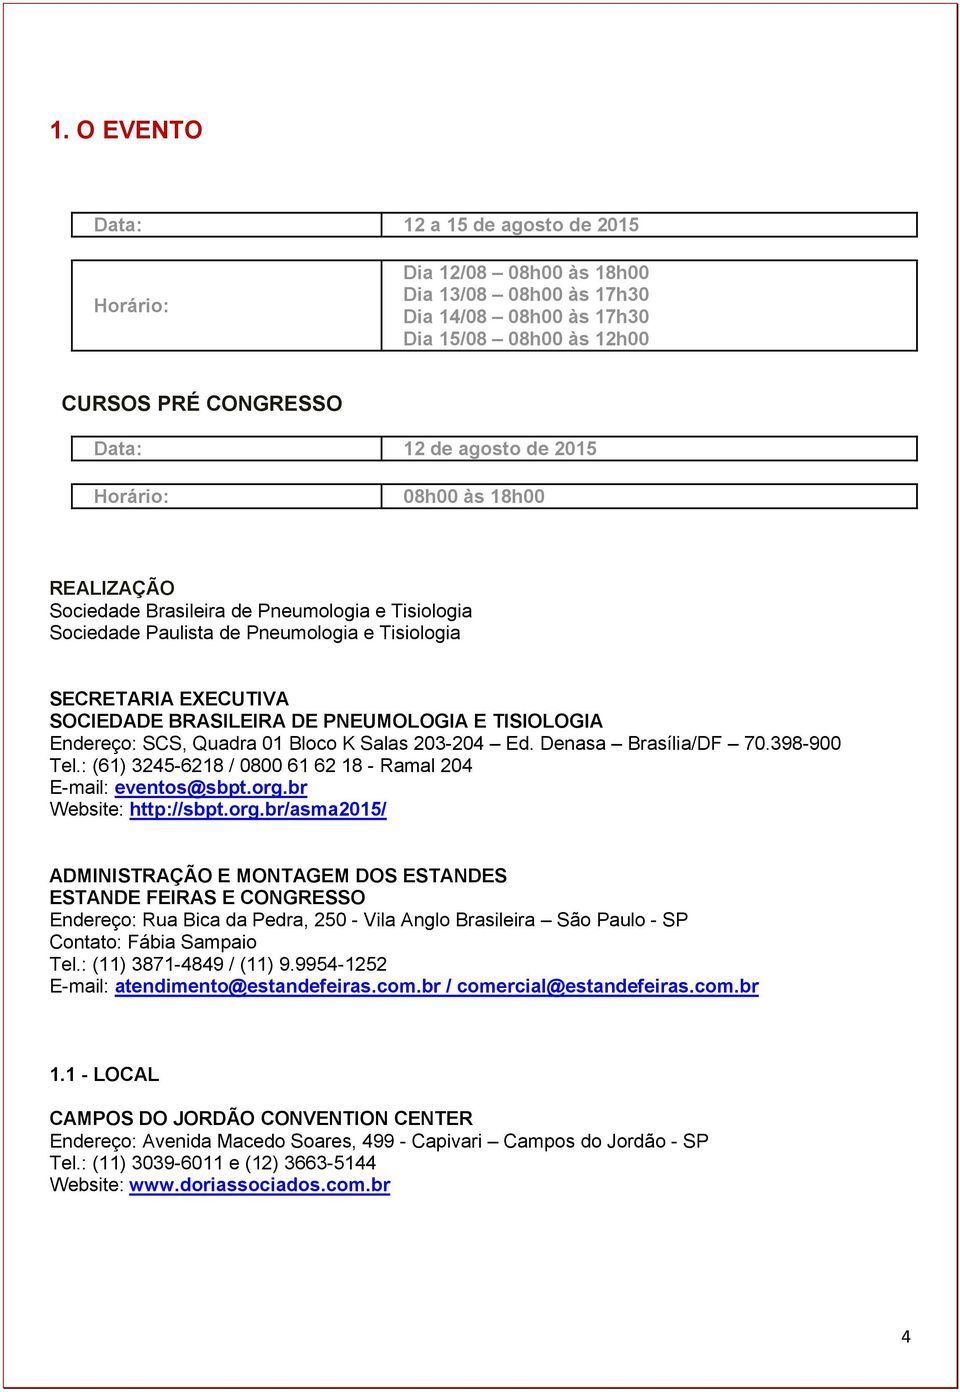 TISIOLOGIA Endereço: SCS, Quadra 01 Bloco K Salas 203-204 Ed. Denasa Brasília/DF 70.398-900 Tel.: (61) 3245-6218 / 0800 61 62 18 - Ramal 204 E-mail: eventos@sbpt.org.